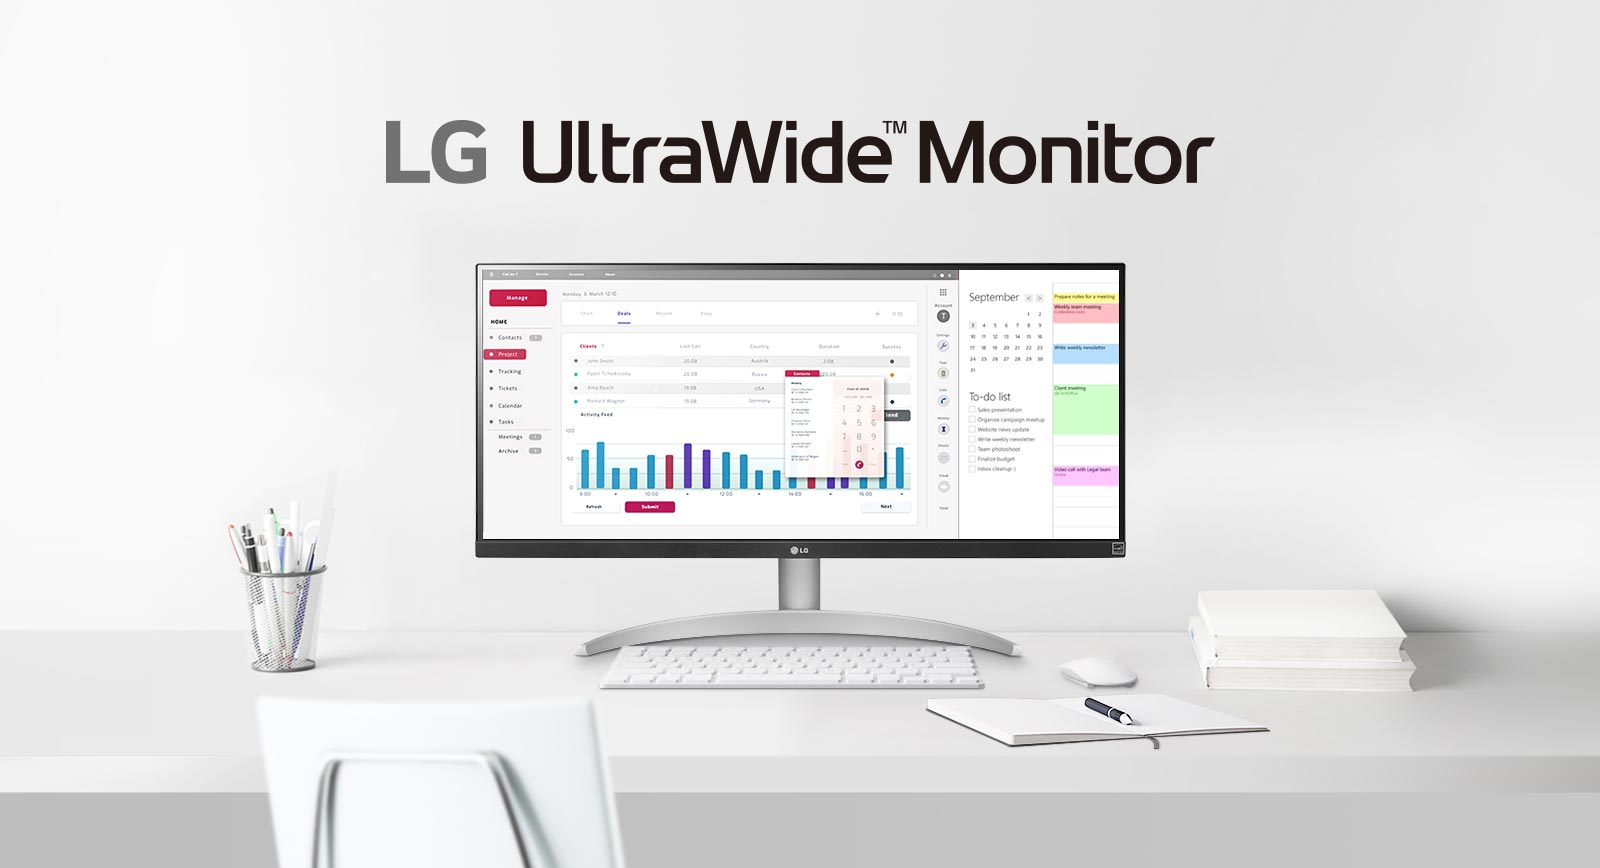 mnt-ultrawide-29wq600-01-lg-ultrawide-monitor-desktop